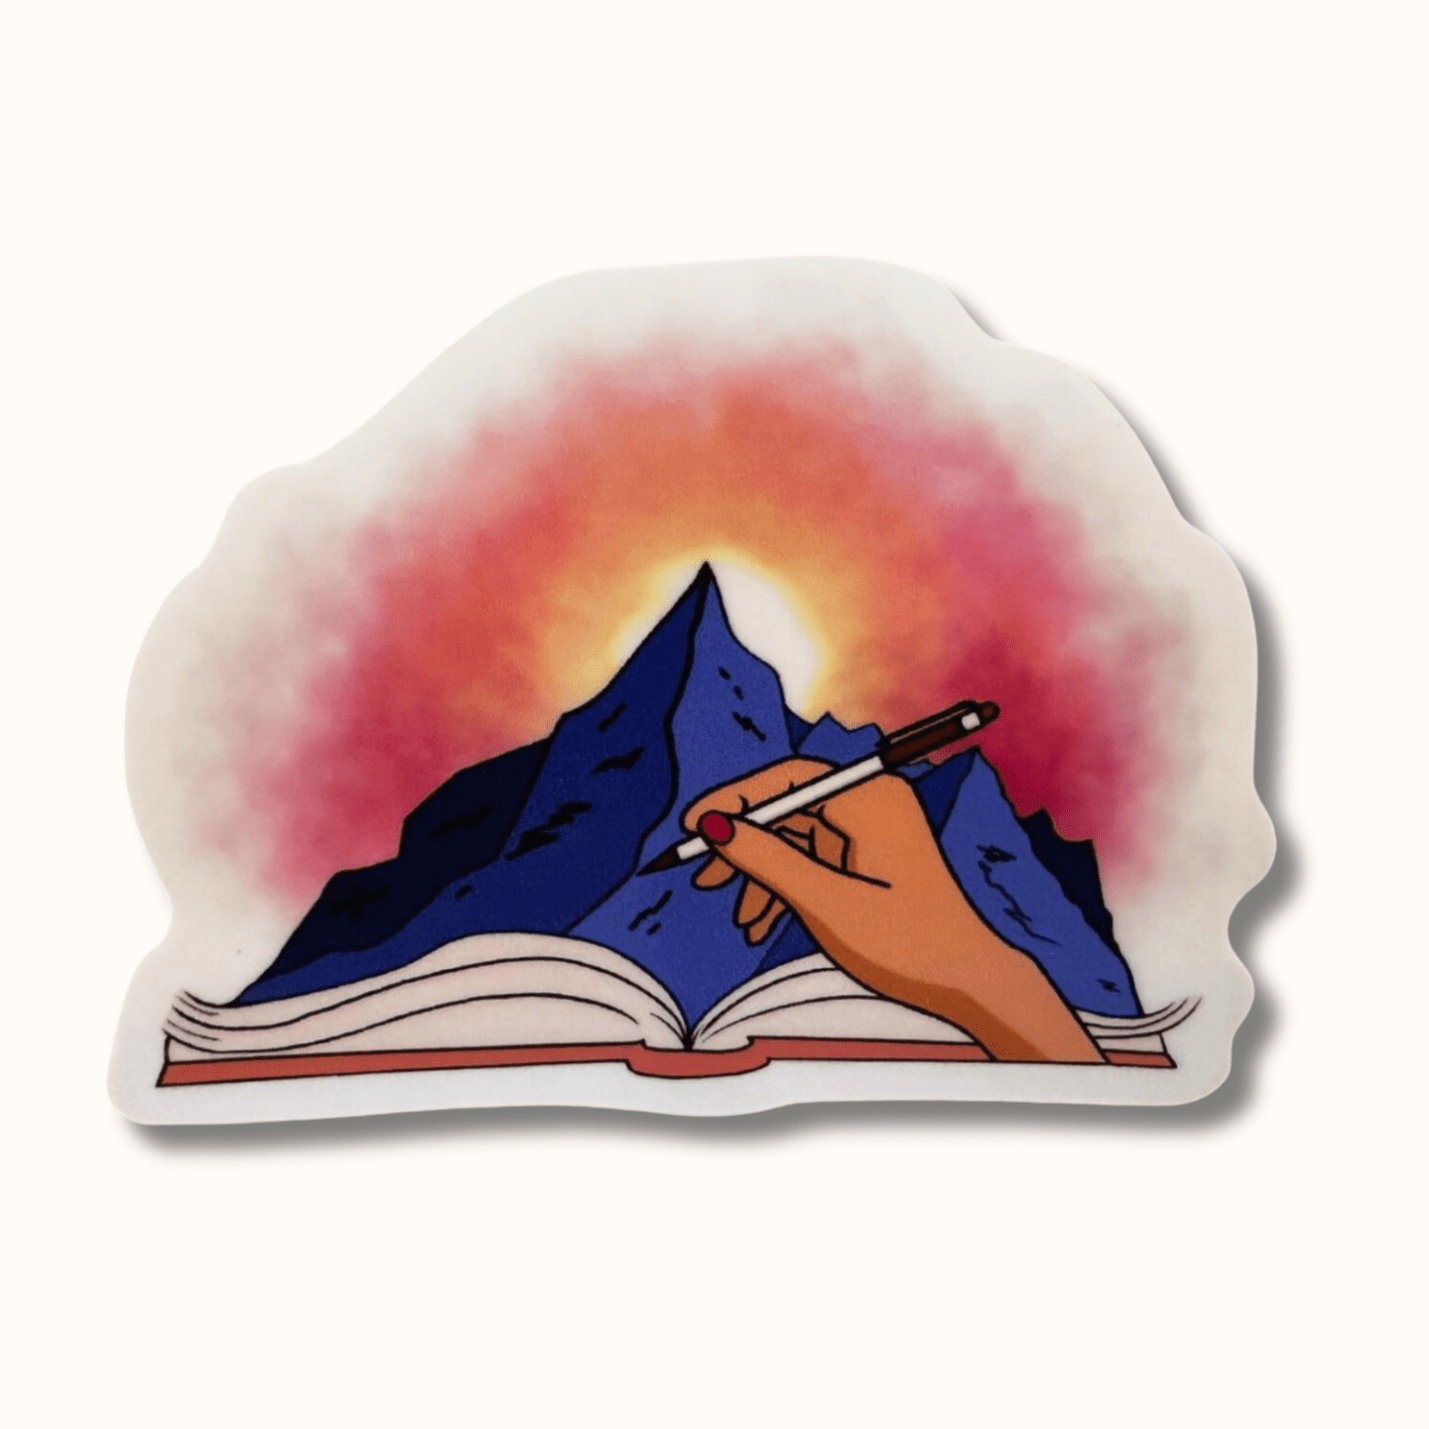 Overcoming Peaks and Valleys BeMo Sticker - BeMo Journal